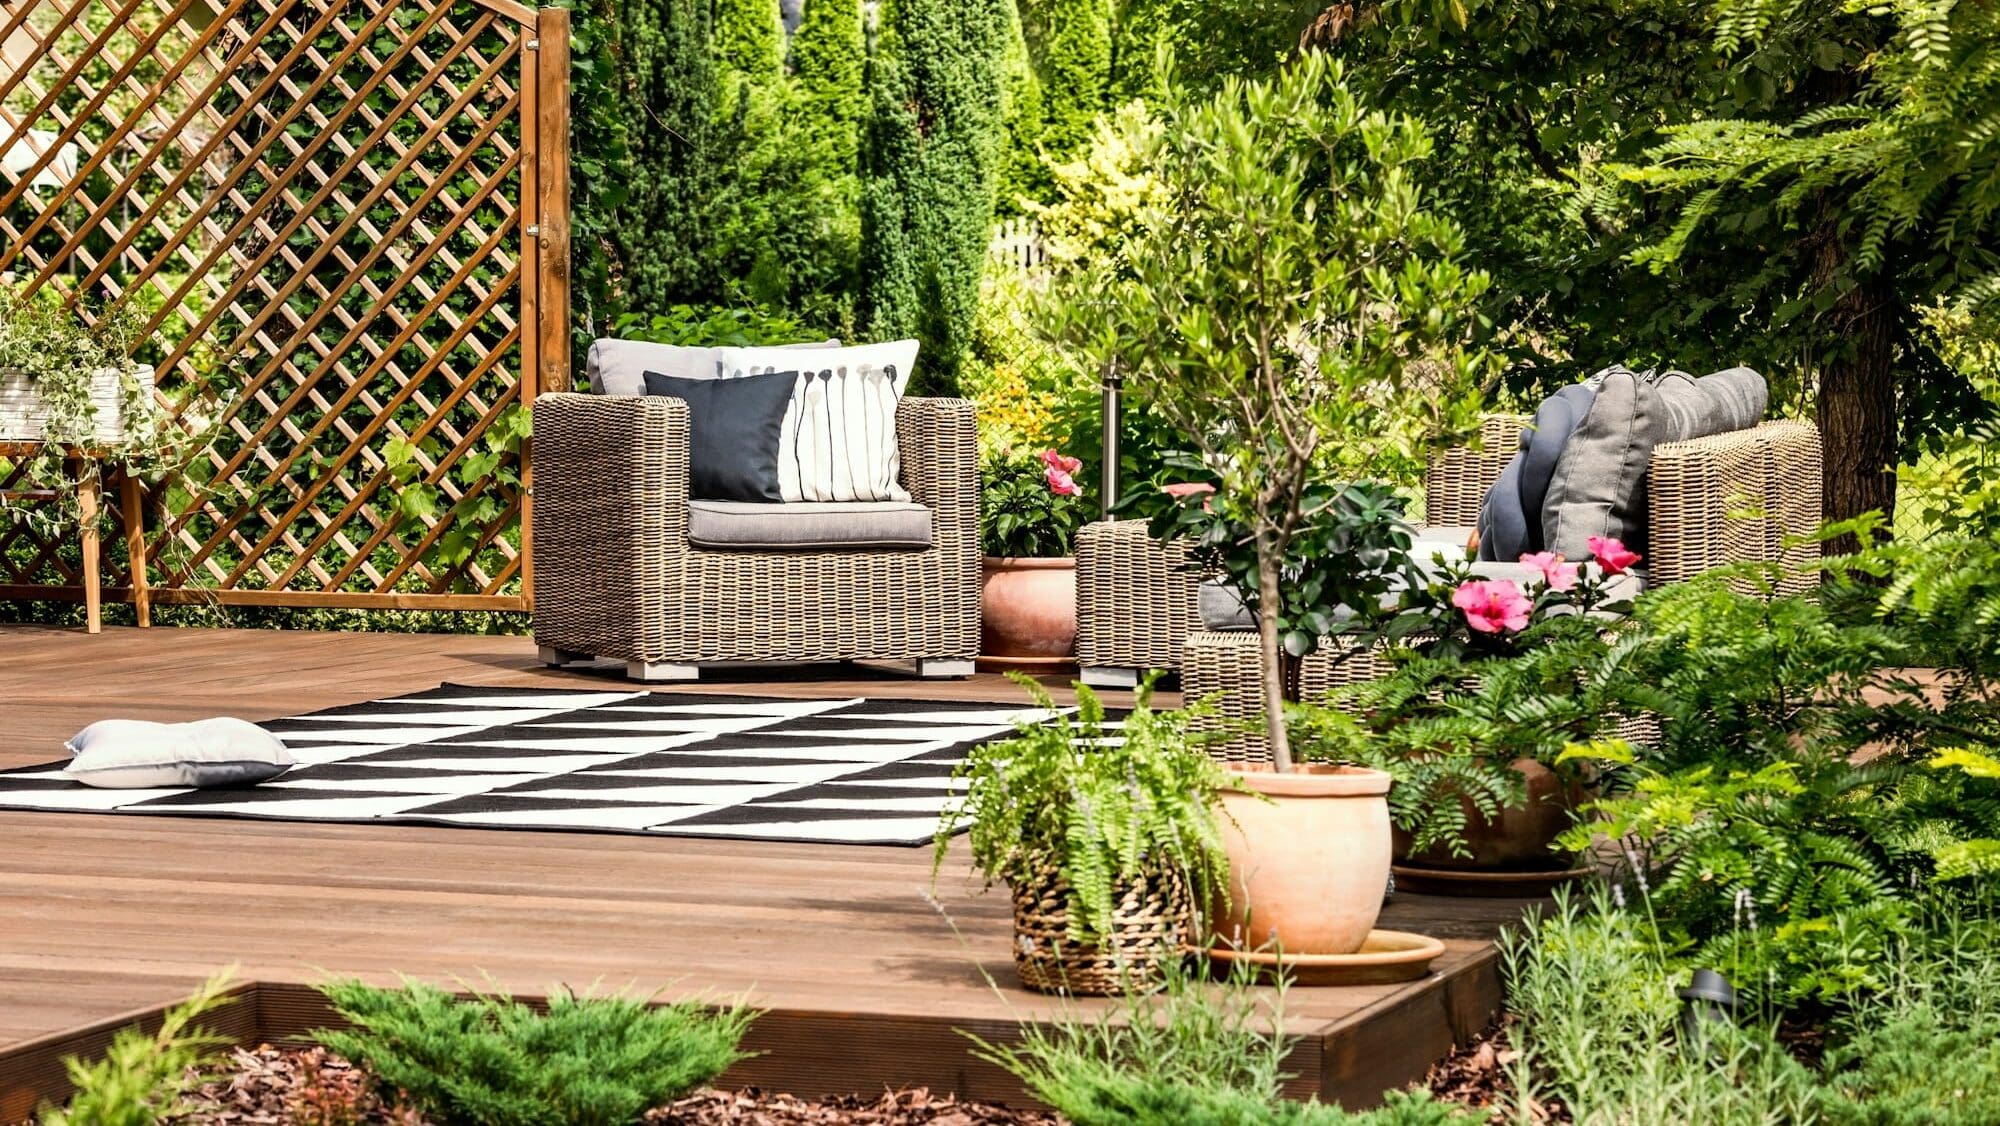 Garden furniture on terrace